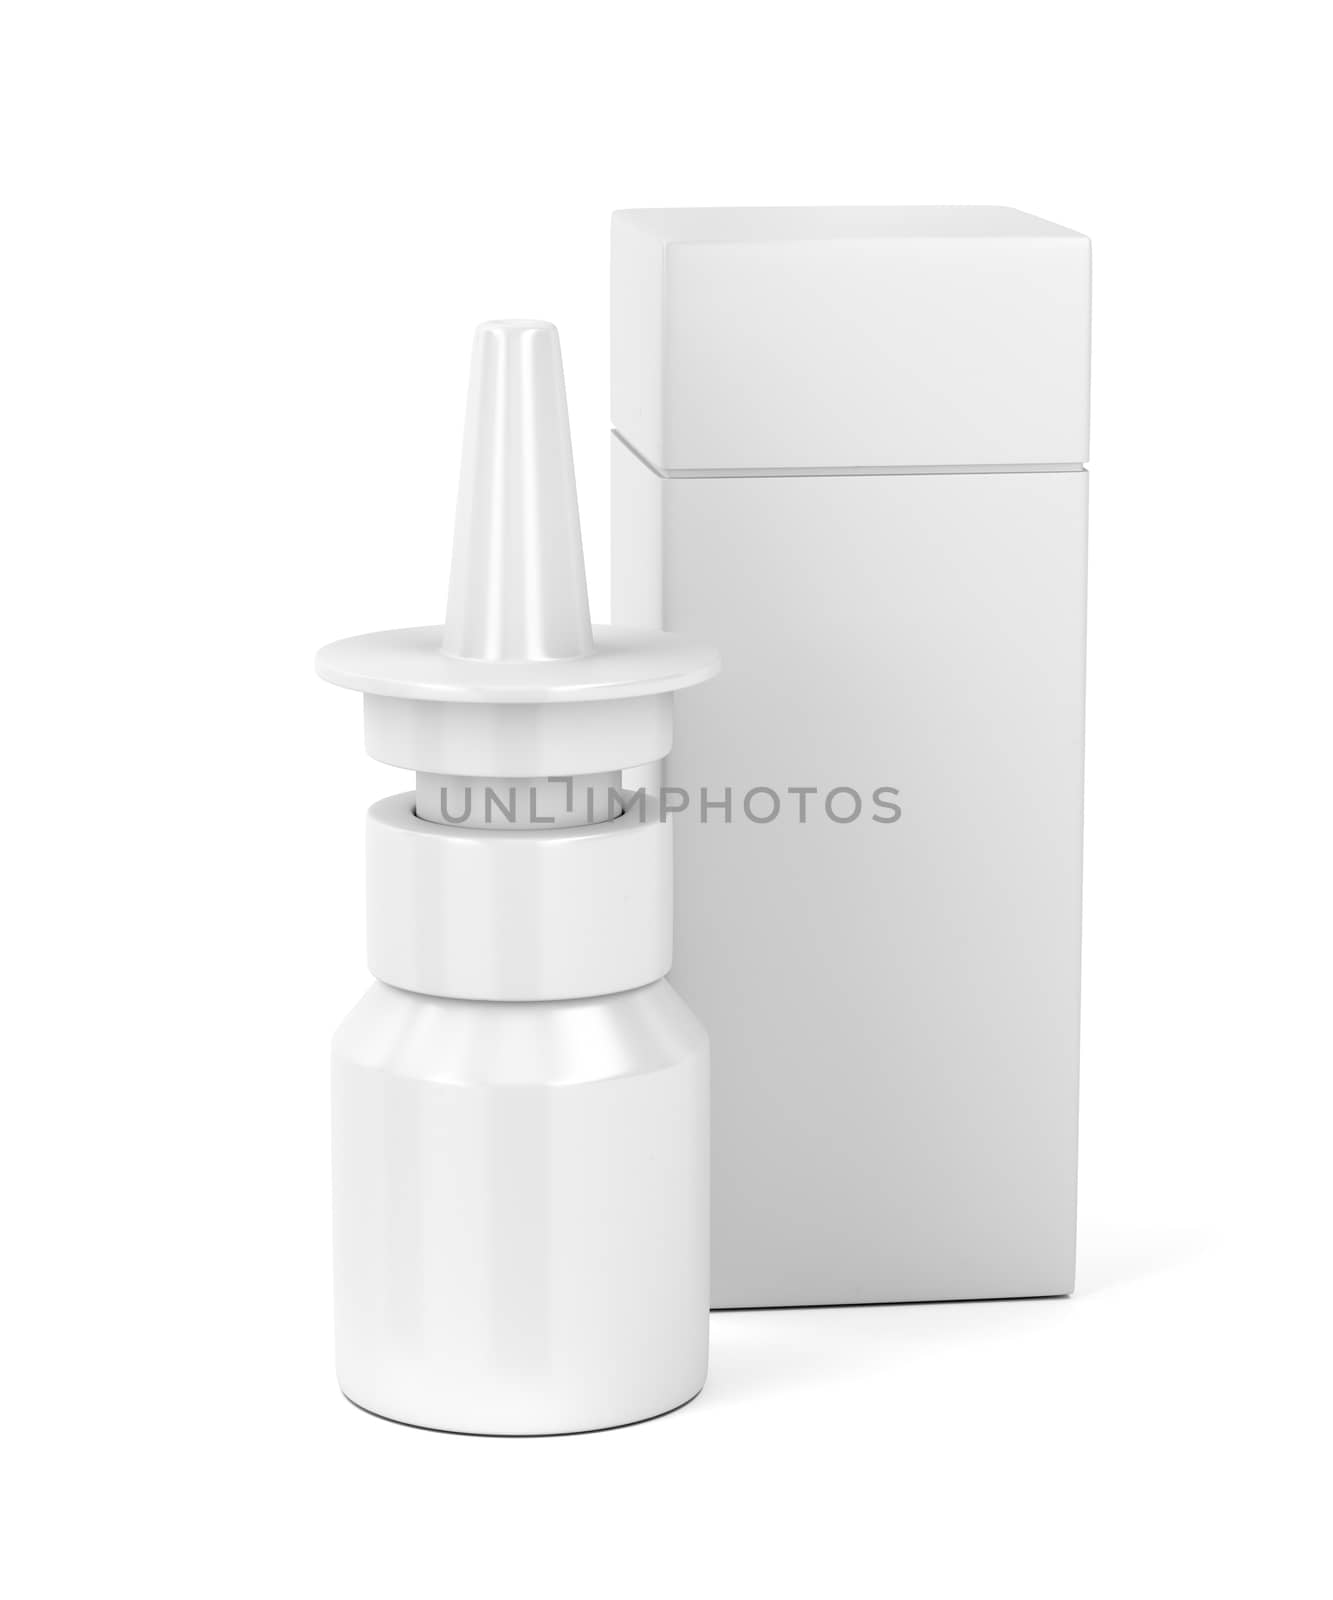 Blank nasal spray bottle and plastic box on white background 